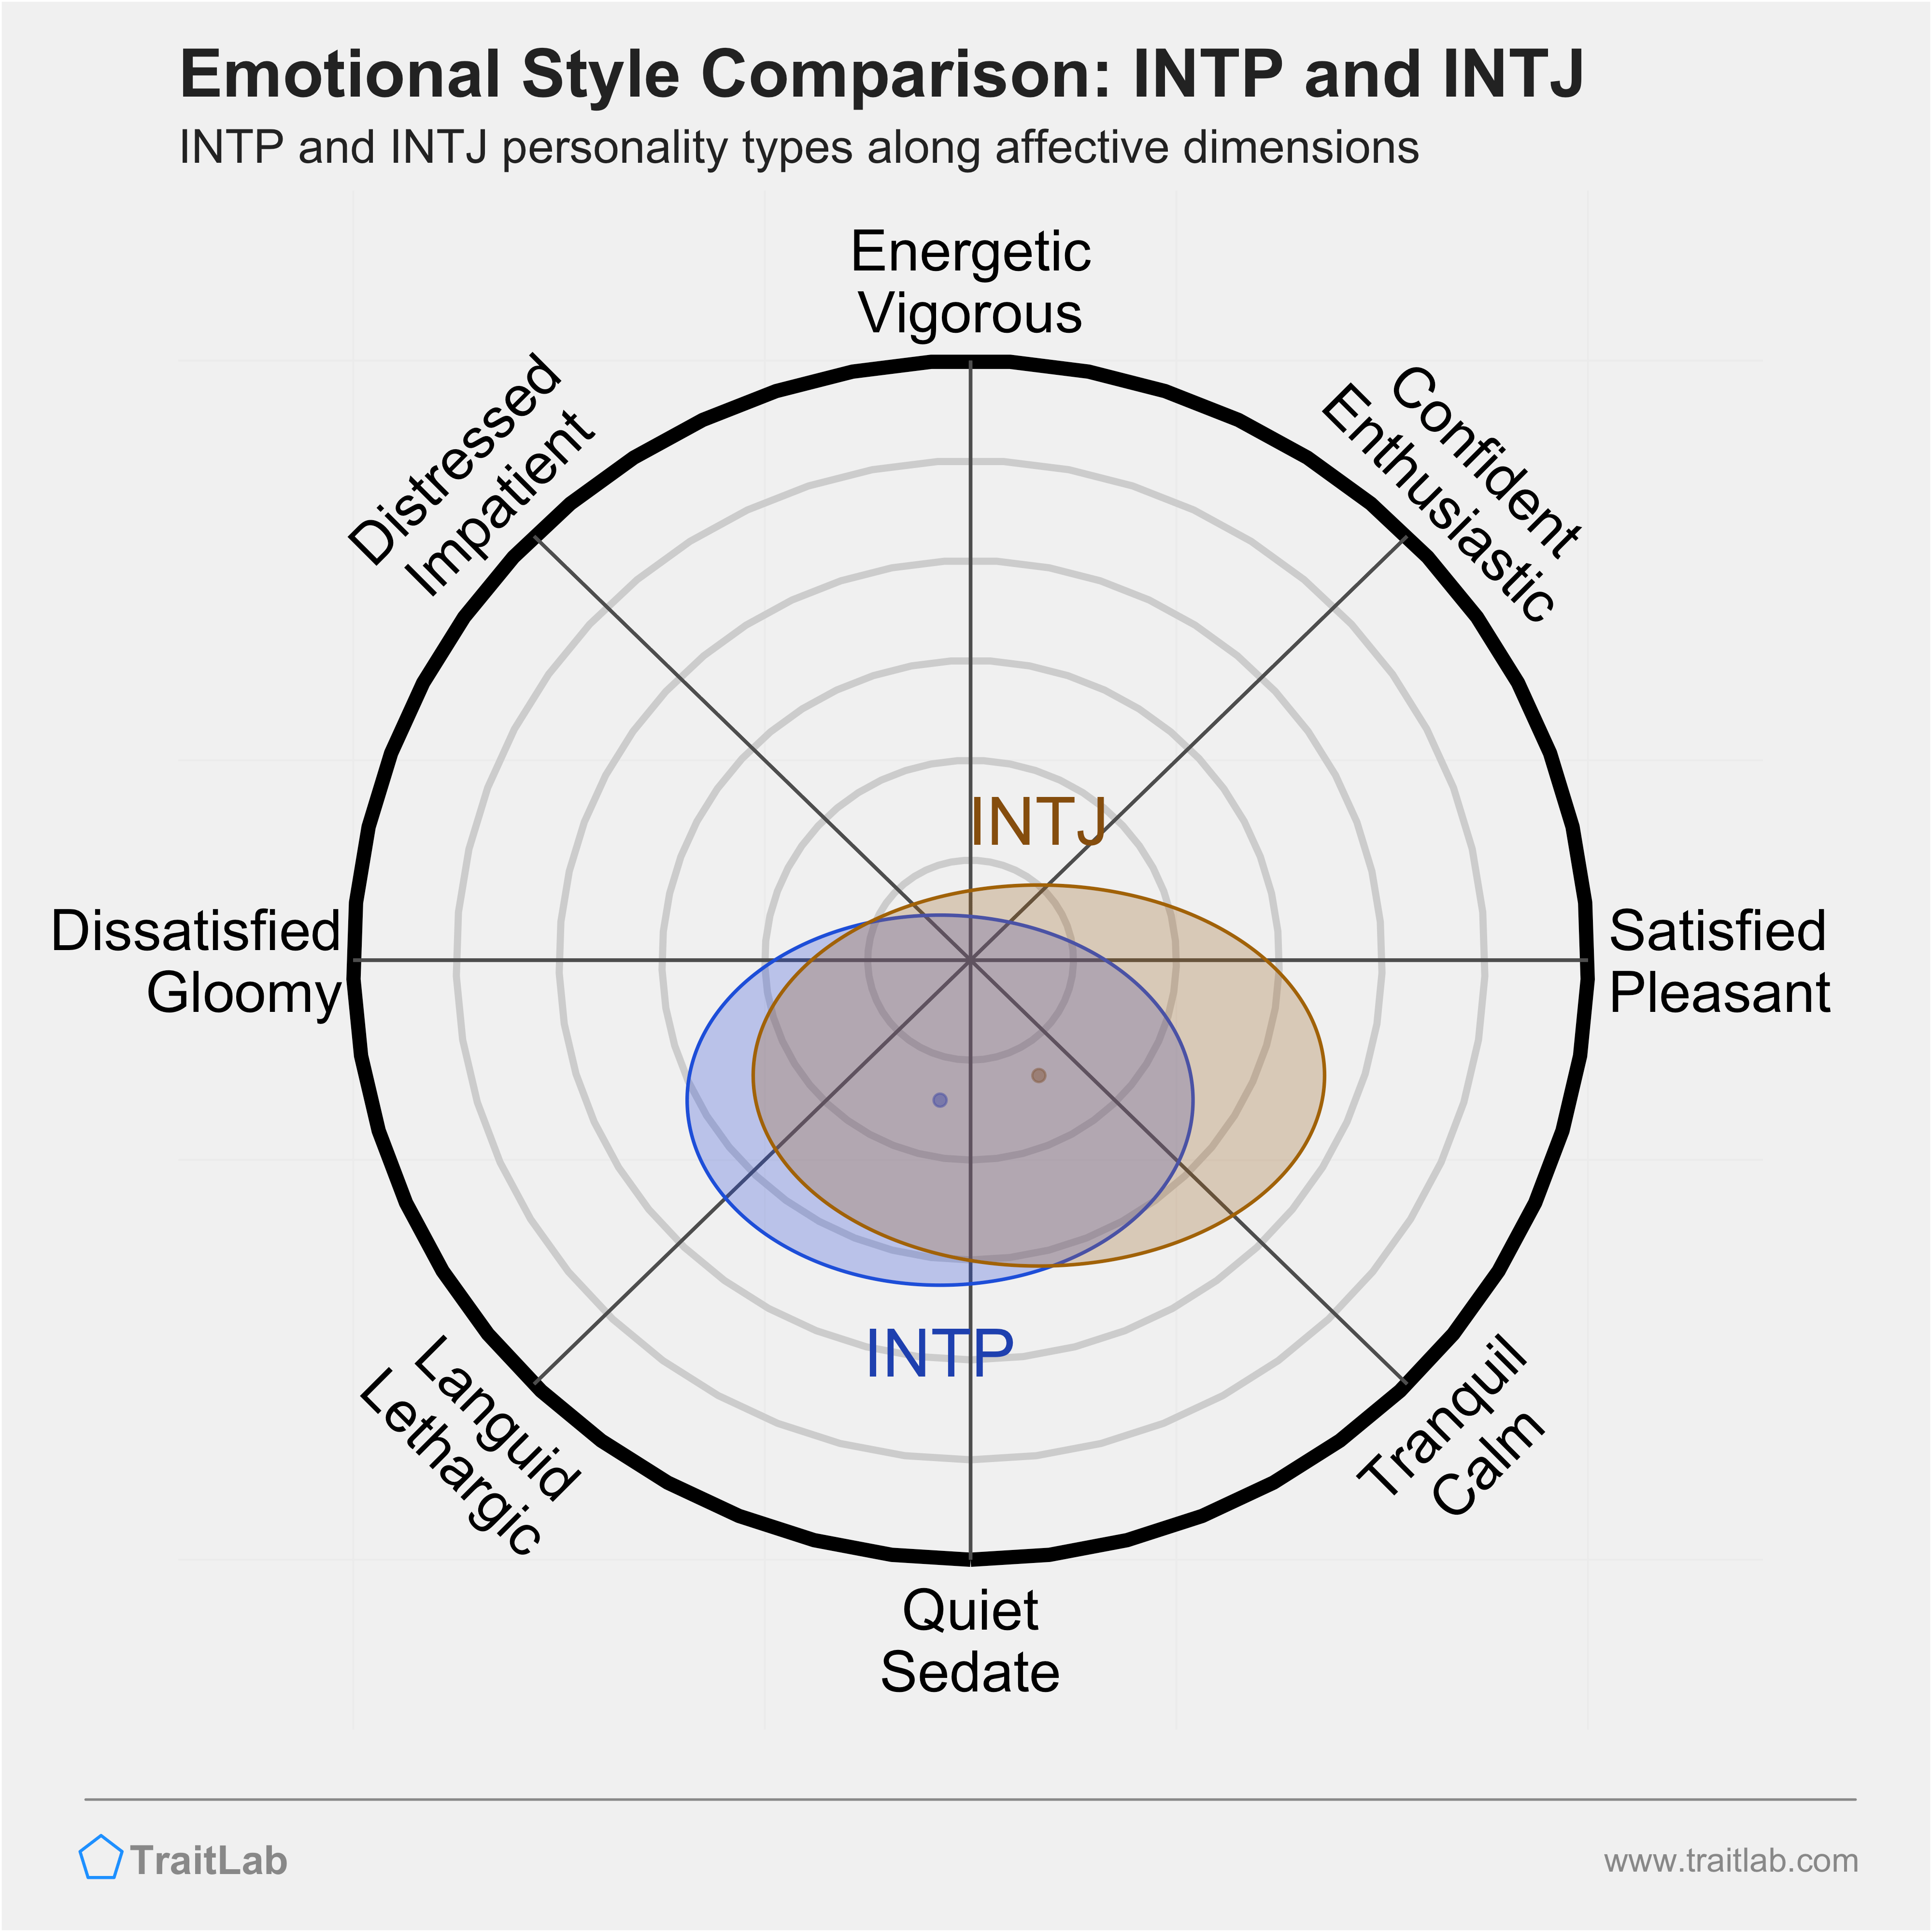 INTP and INTJ comparison across emotional (affective) dimensions